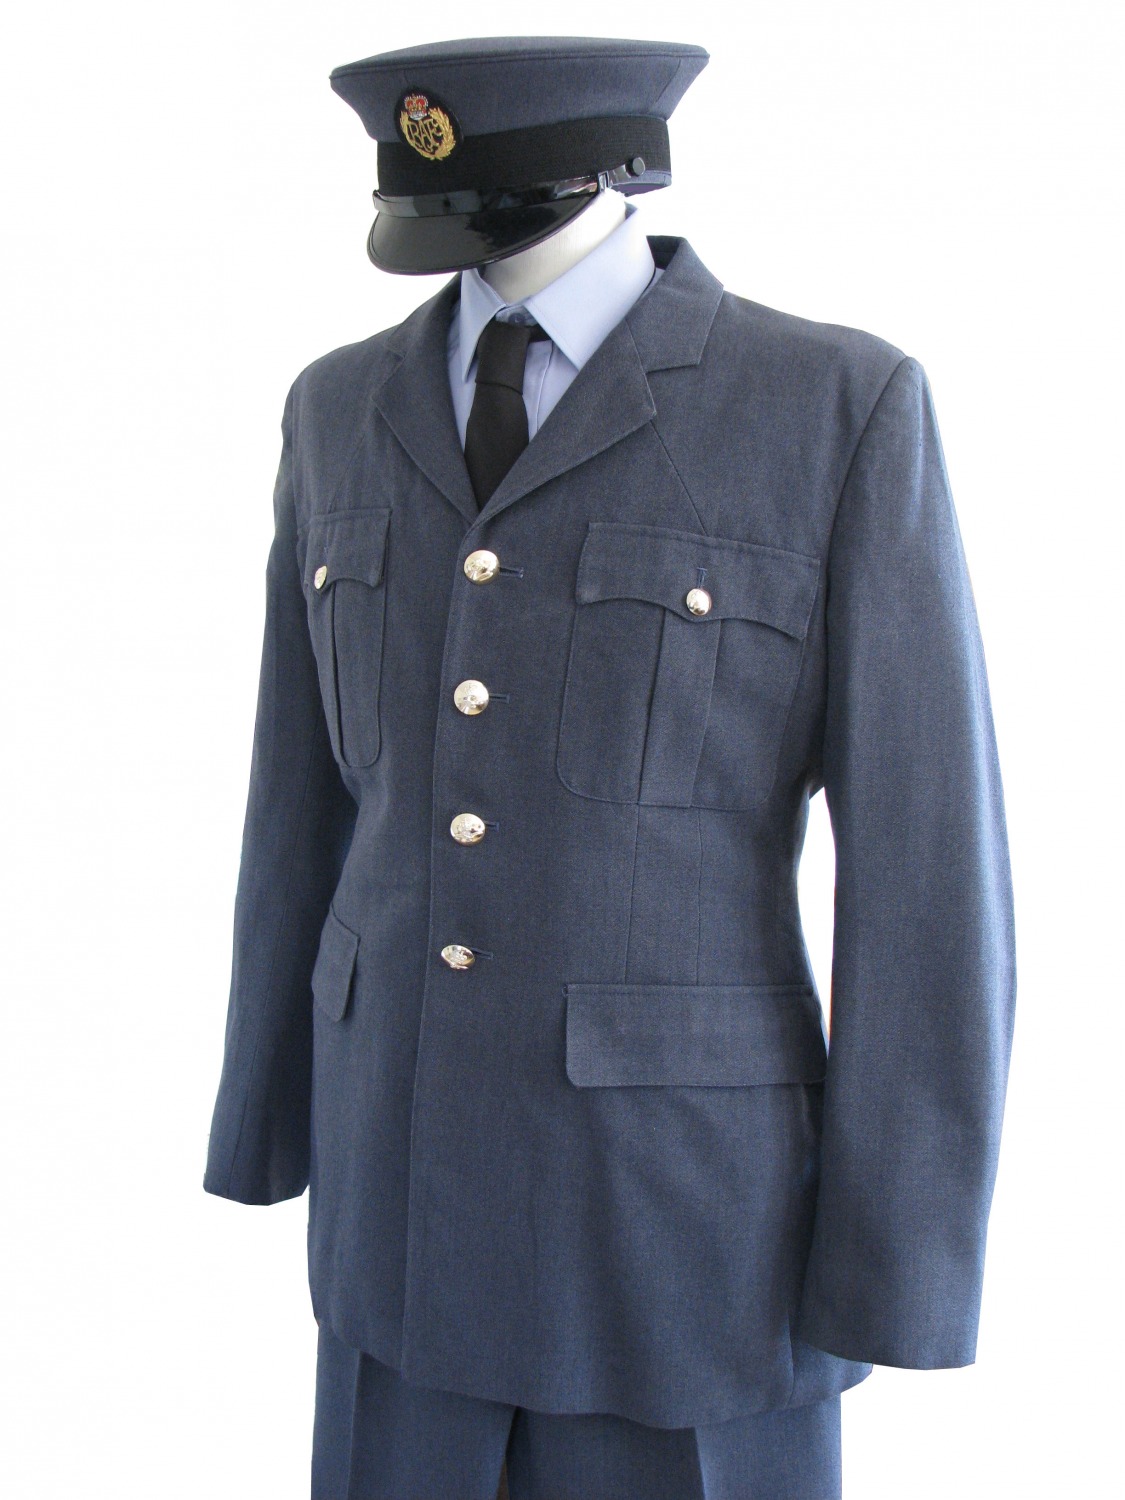 Men's 1940s Wartime RAF Uniform Jacket Chest 42" Image